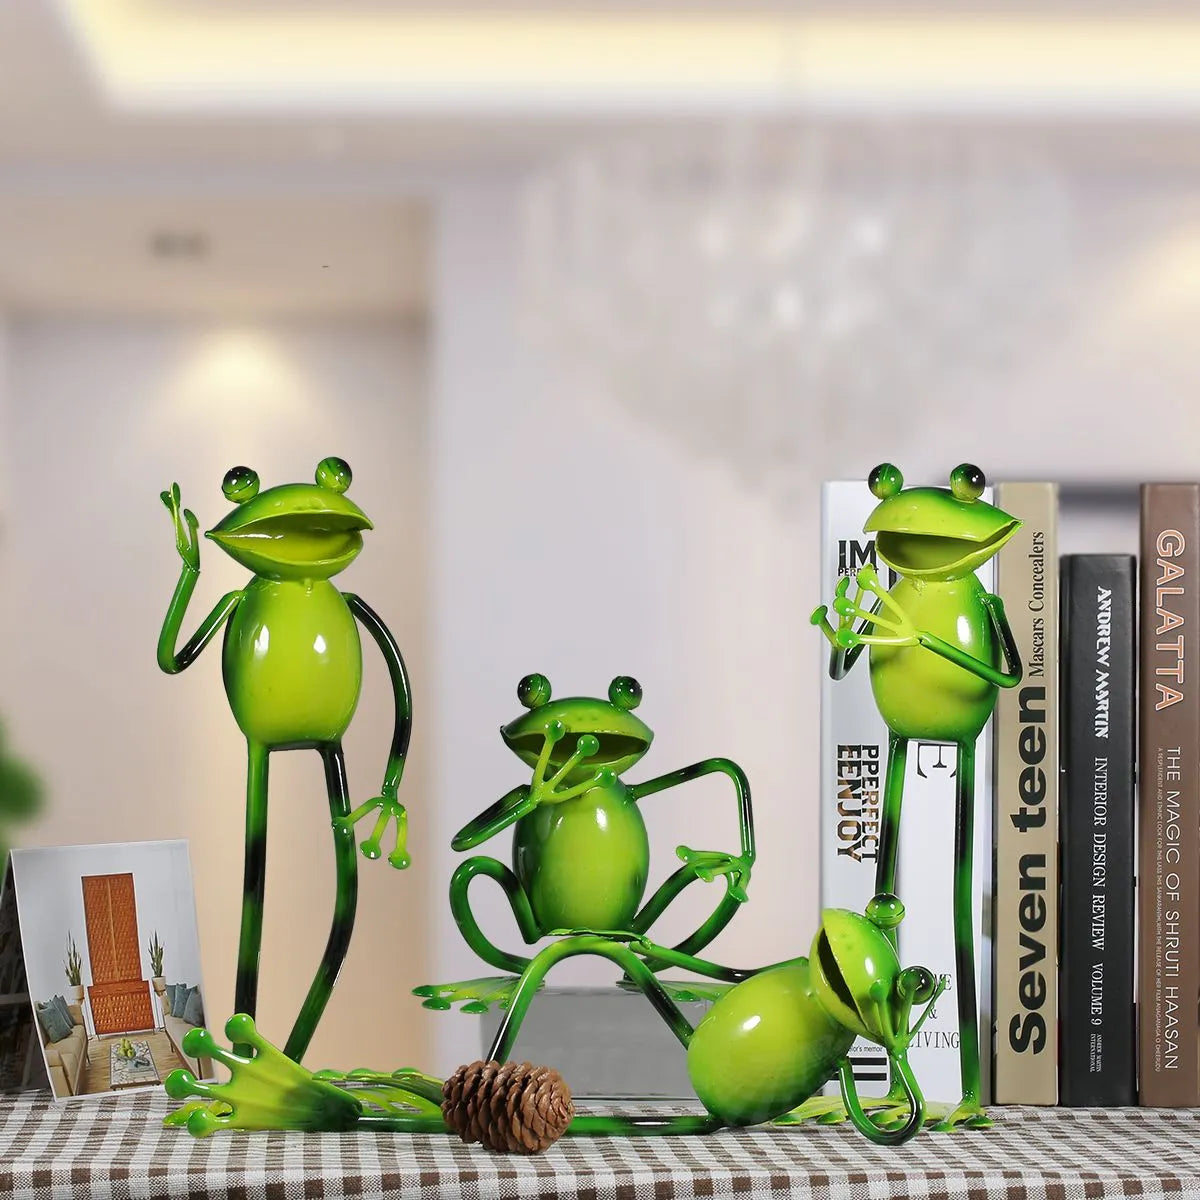 TOOARTS Metal sculpture Frog shaped sculpture Home decoration handicrafts